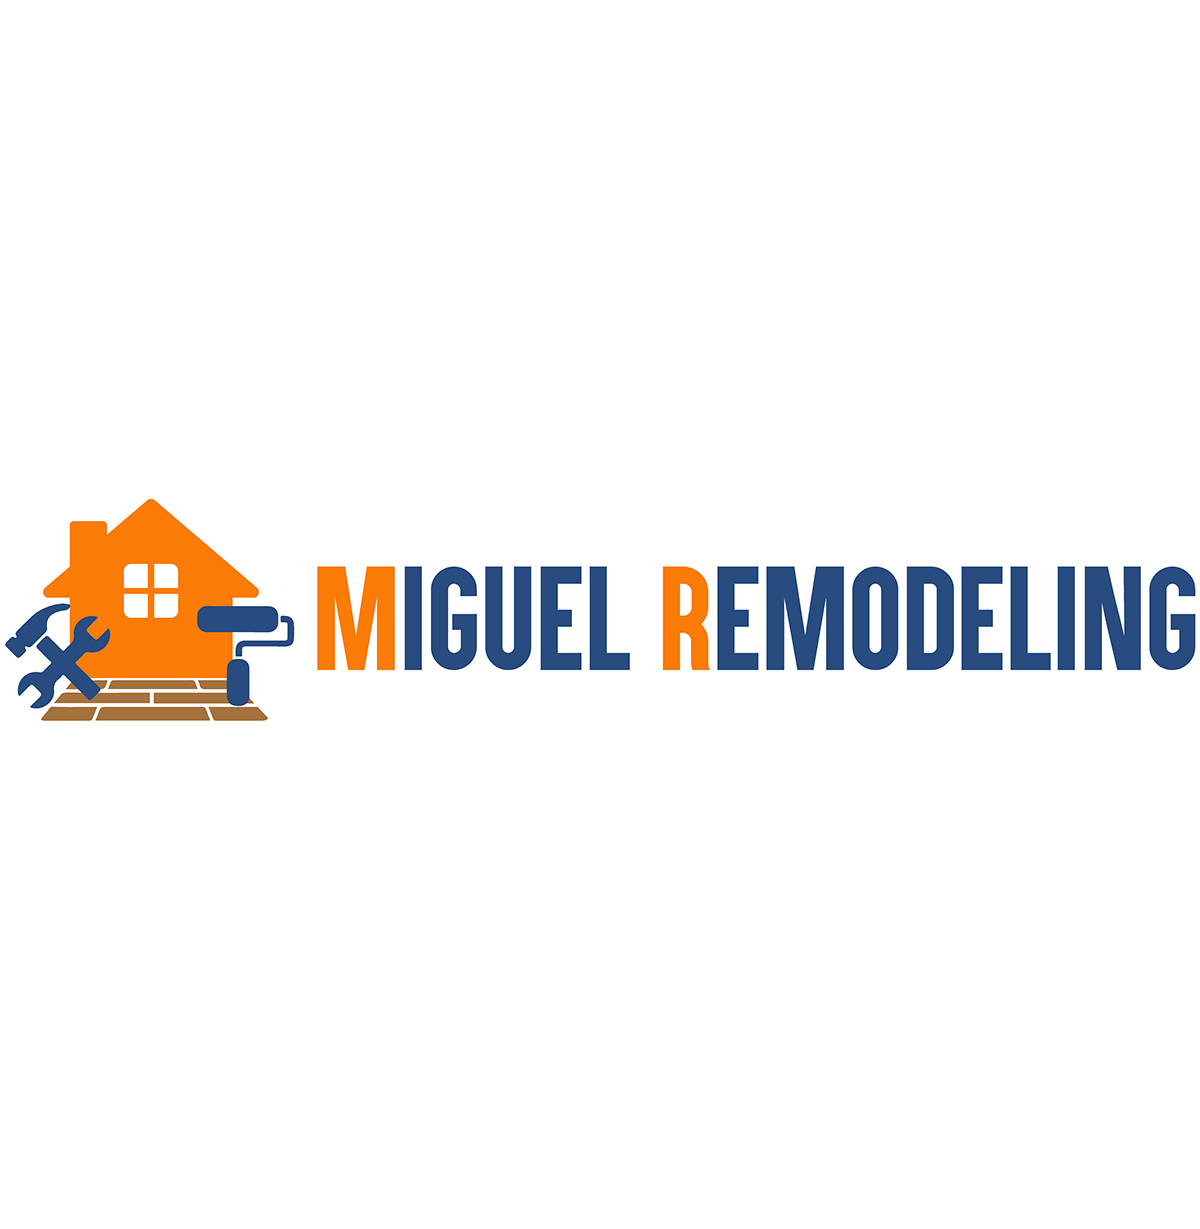 Miguel Remodeling